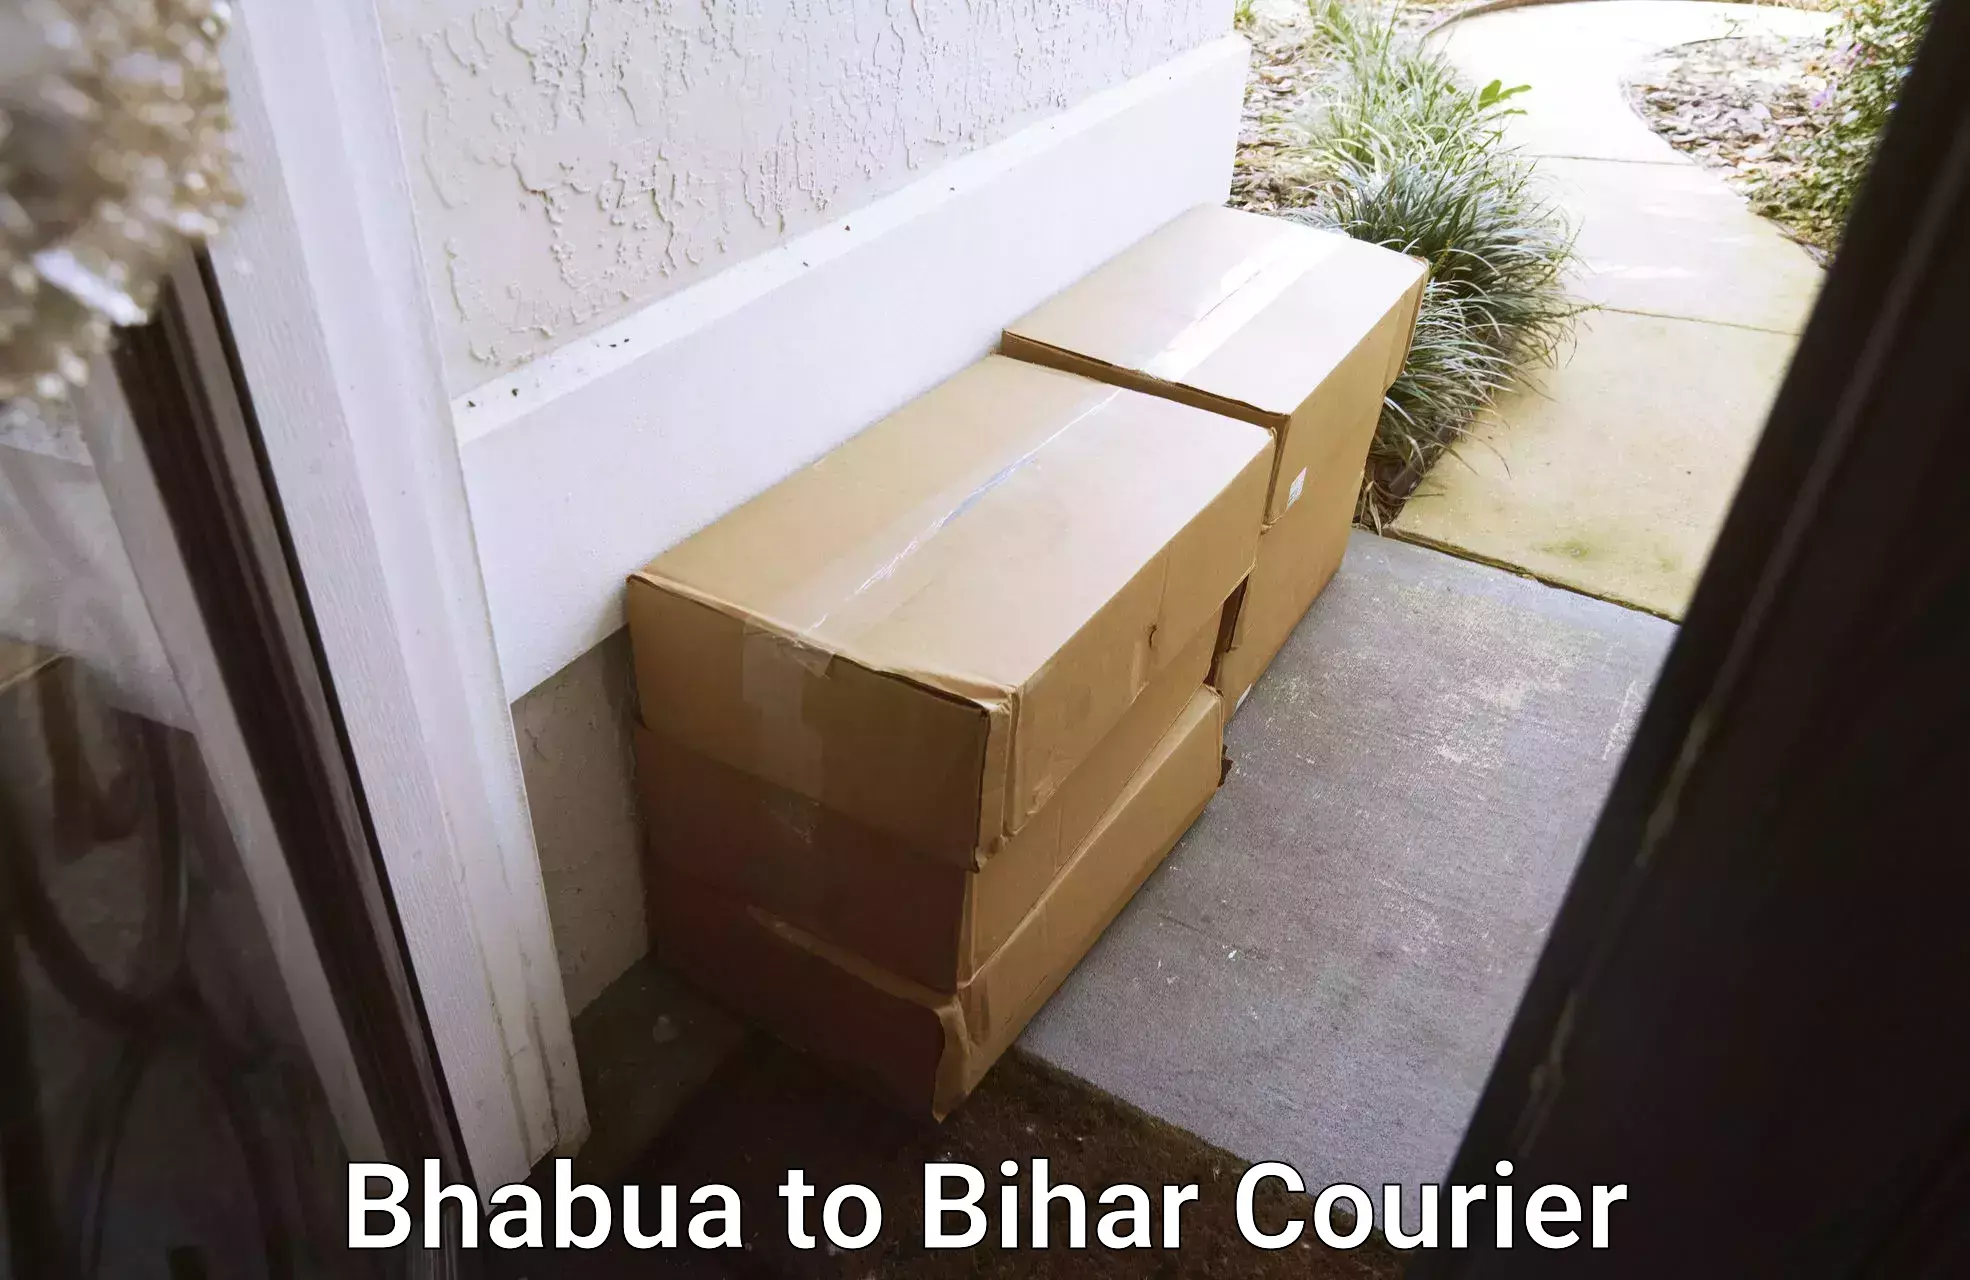 Professional moving company Bhabua to Piro